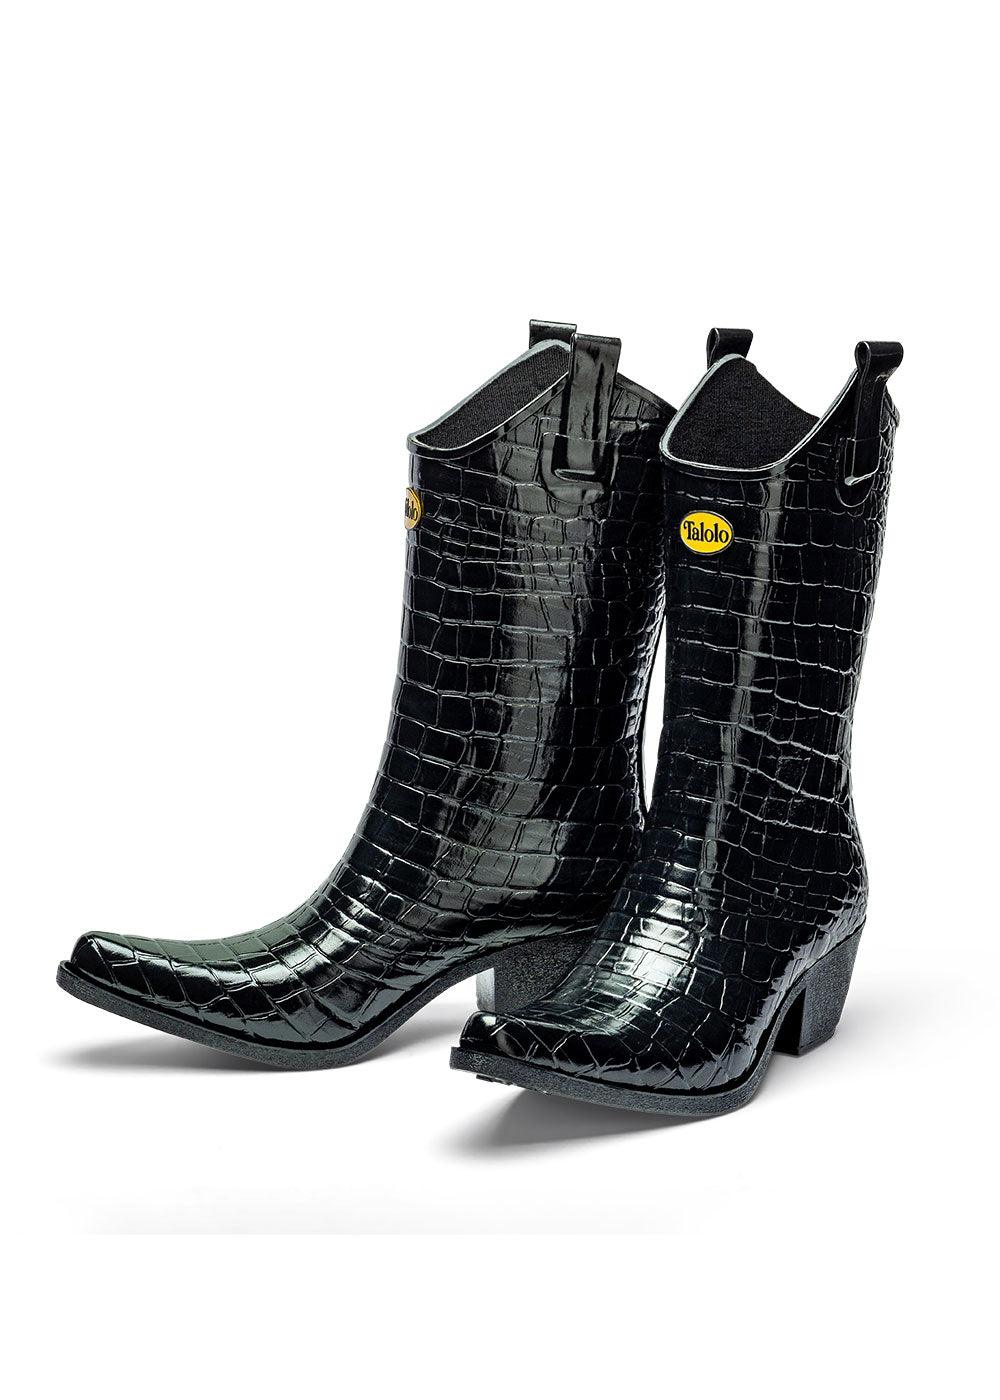 Talolo Urban Croc Cowboy Boot Wellies - Justina Clothing